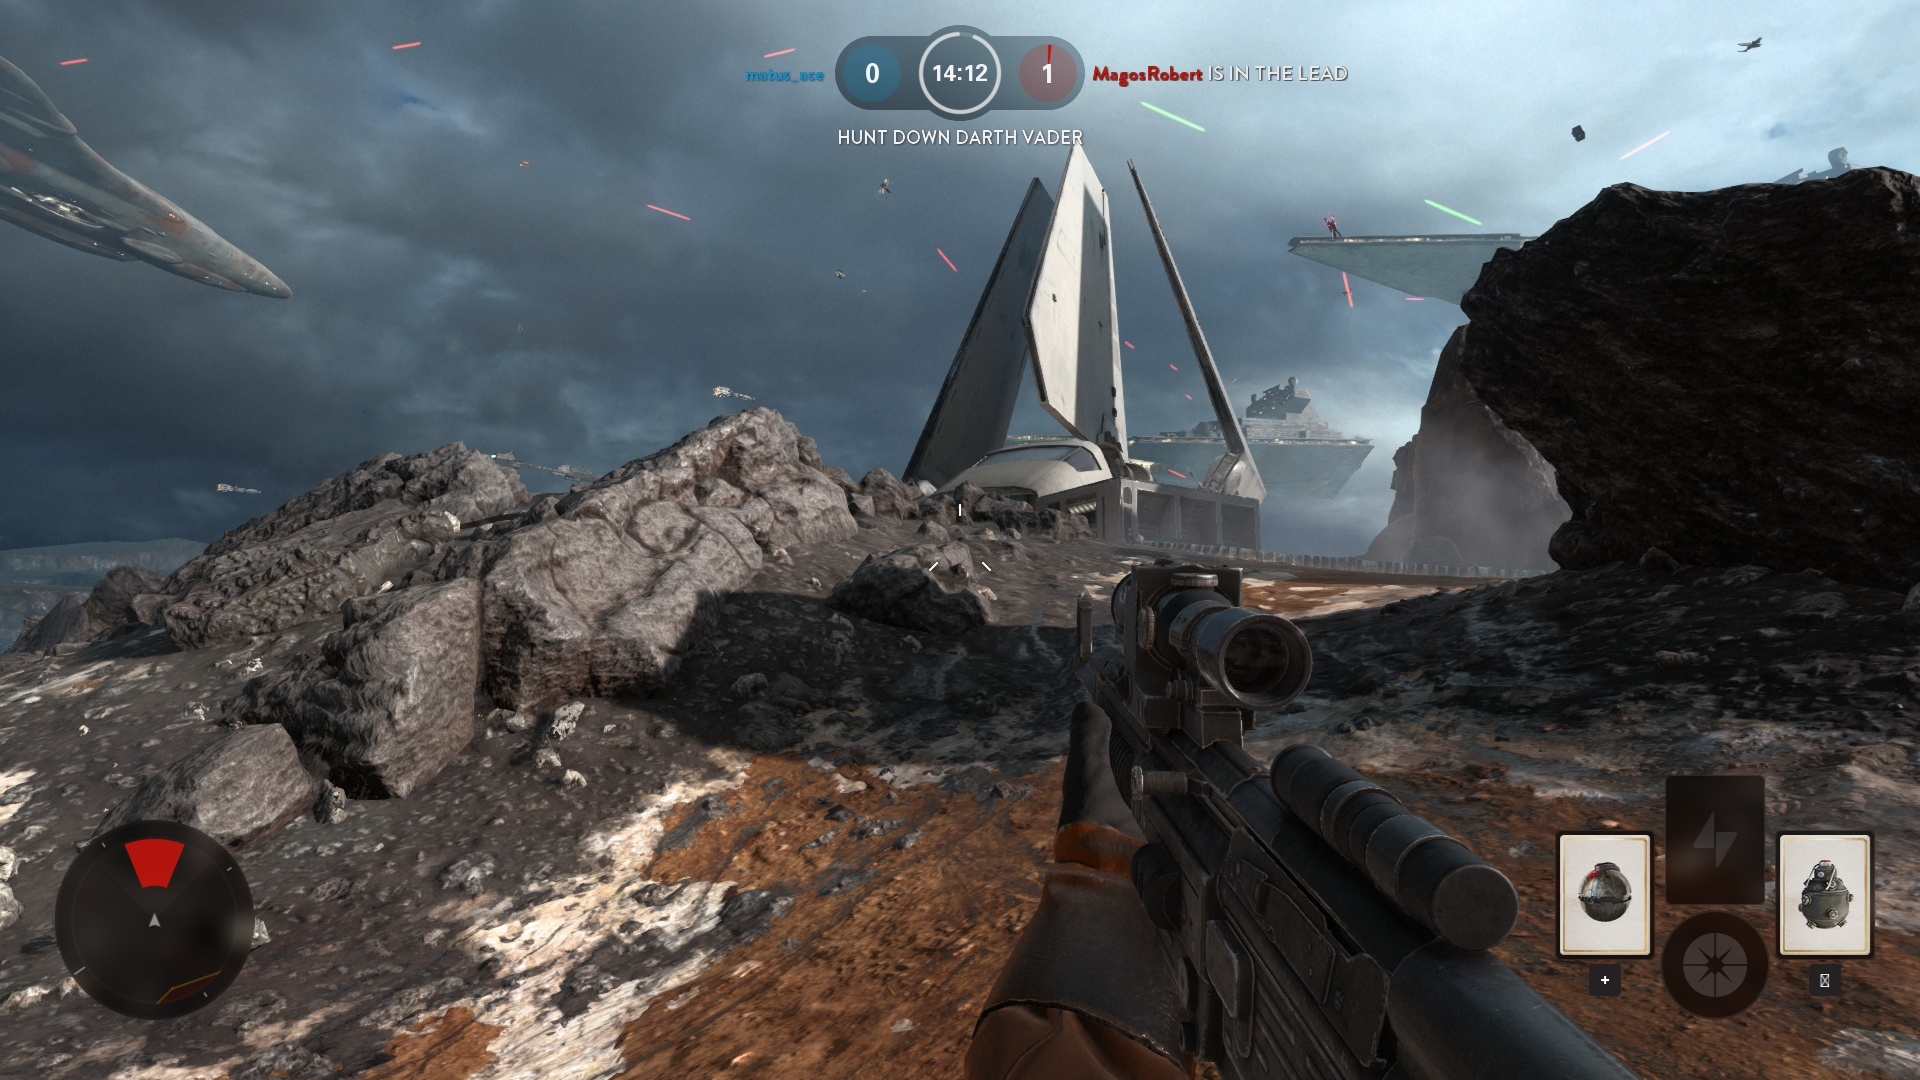 Star Wars: Battlefront Pri hre sa obas muste aj zastavi, aby ste si uvedomili to vetko okolo vs.